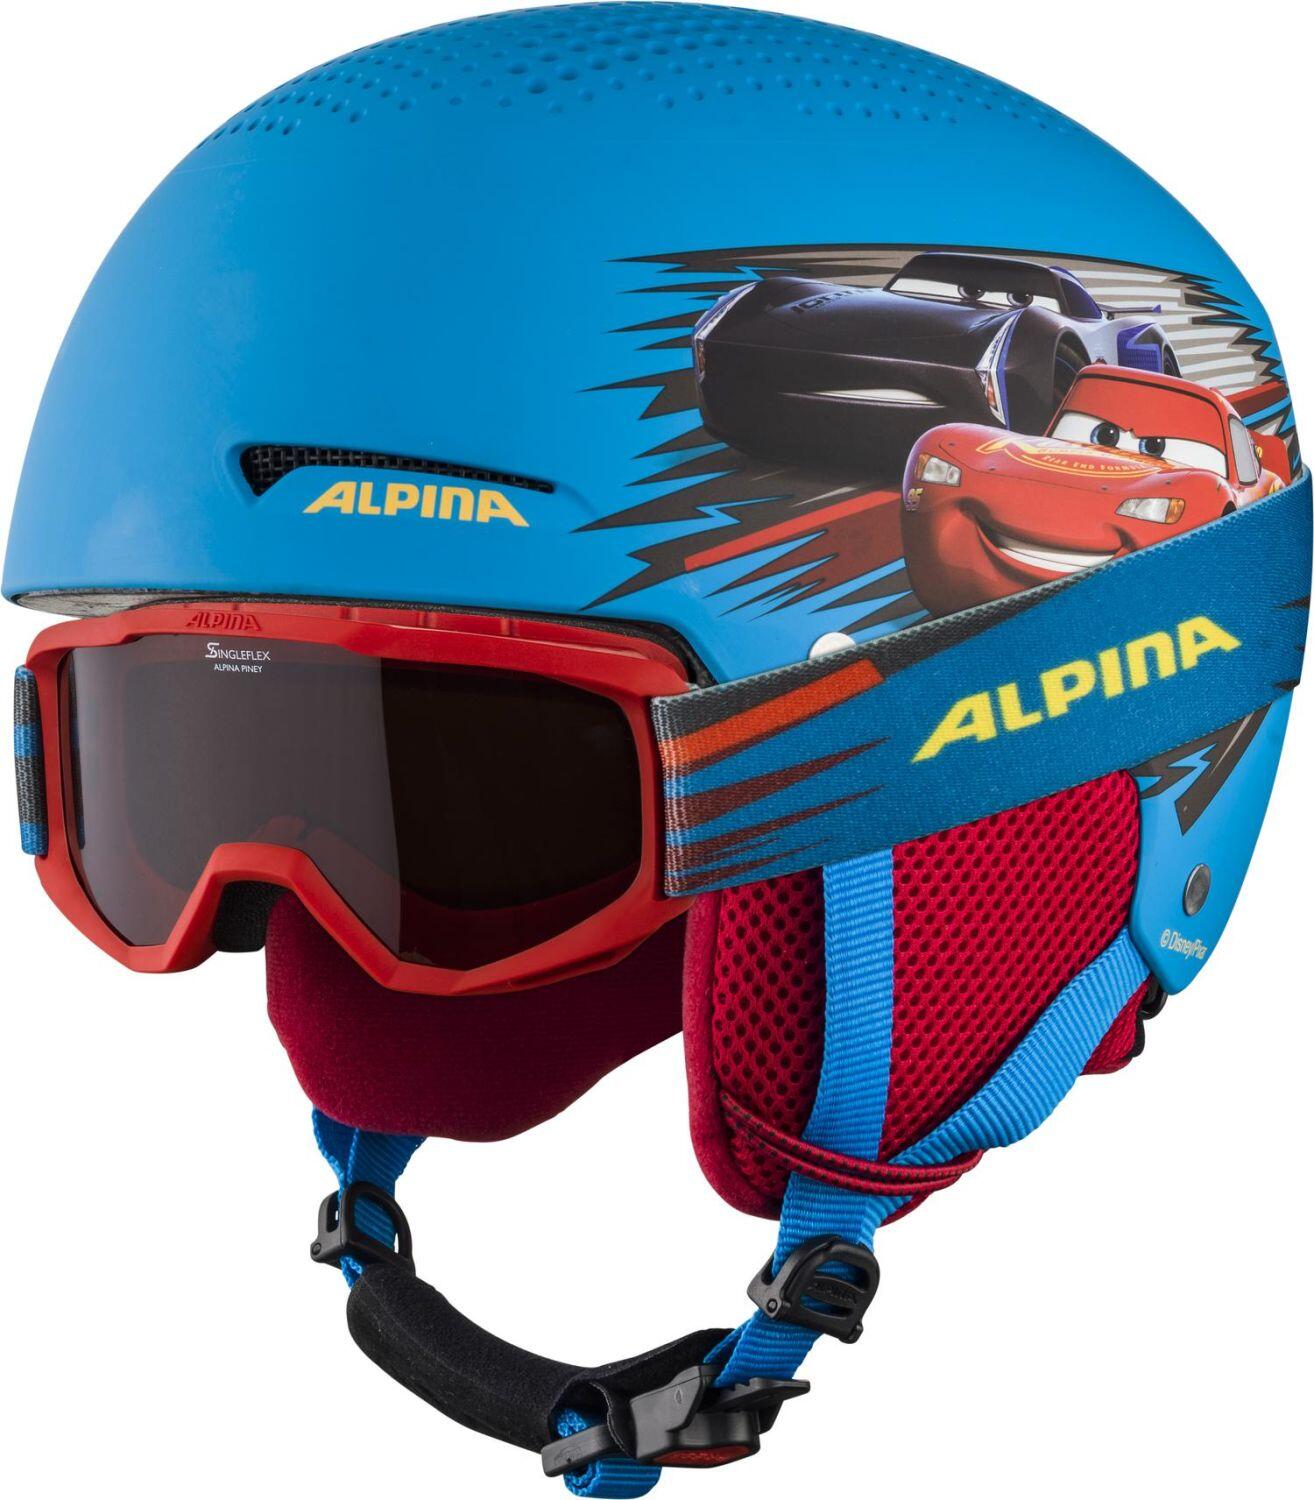 Alpina Zupo Disney Set Skihelm Inklusive Skibrille (48-52 Cm, 80 Cars Inkl. Piney Red)